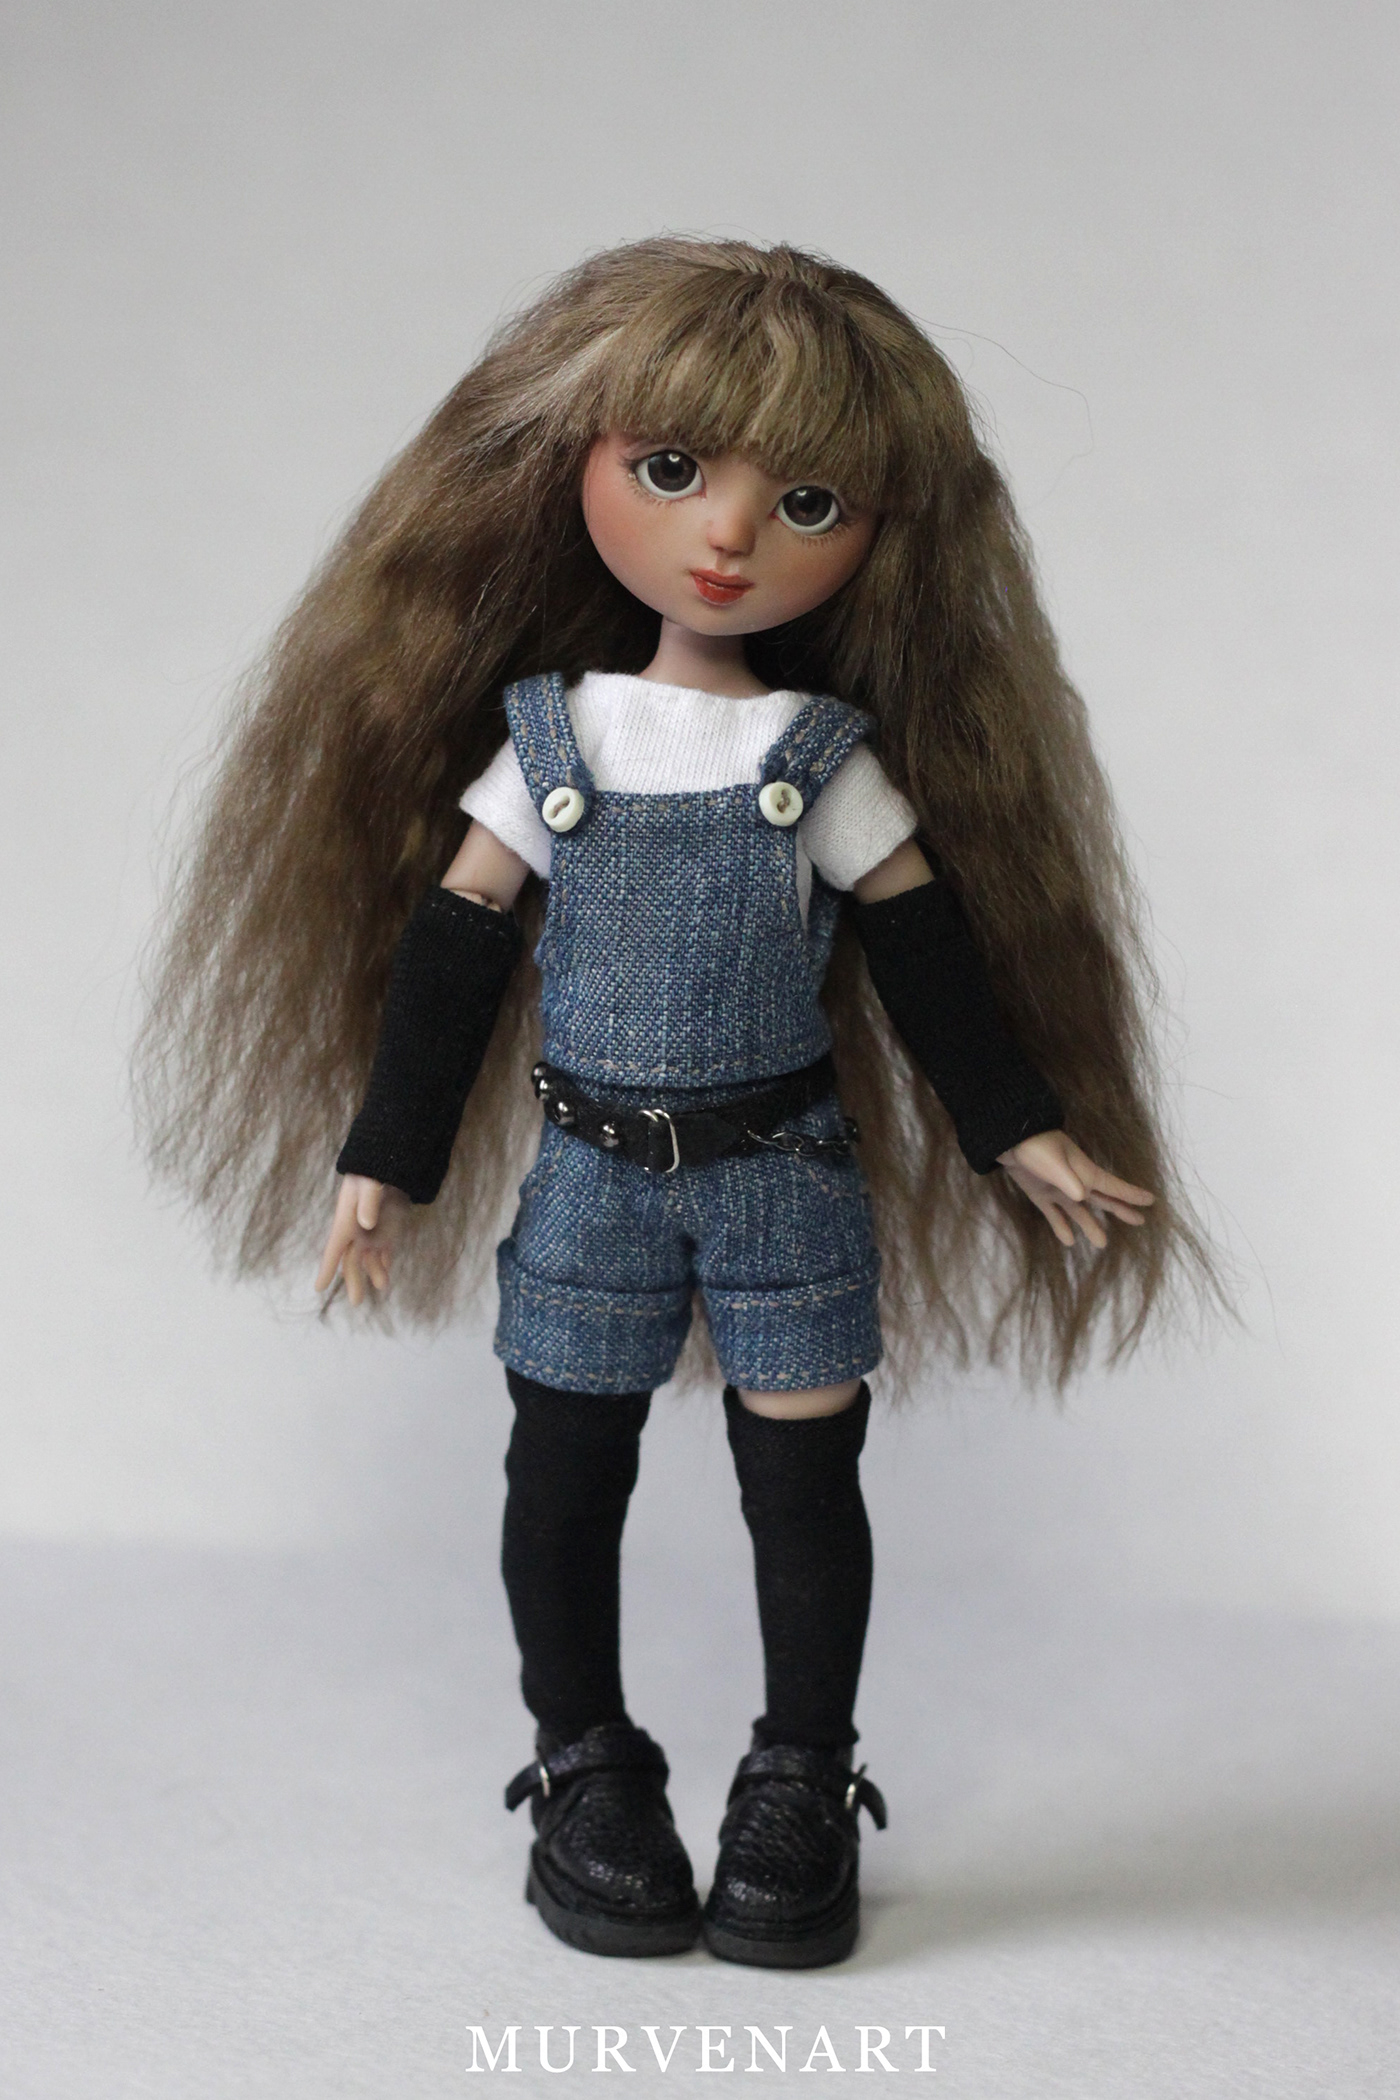 bjd balljointeddoll doll resin toy design Artdoll collectibles gift